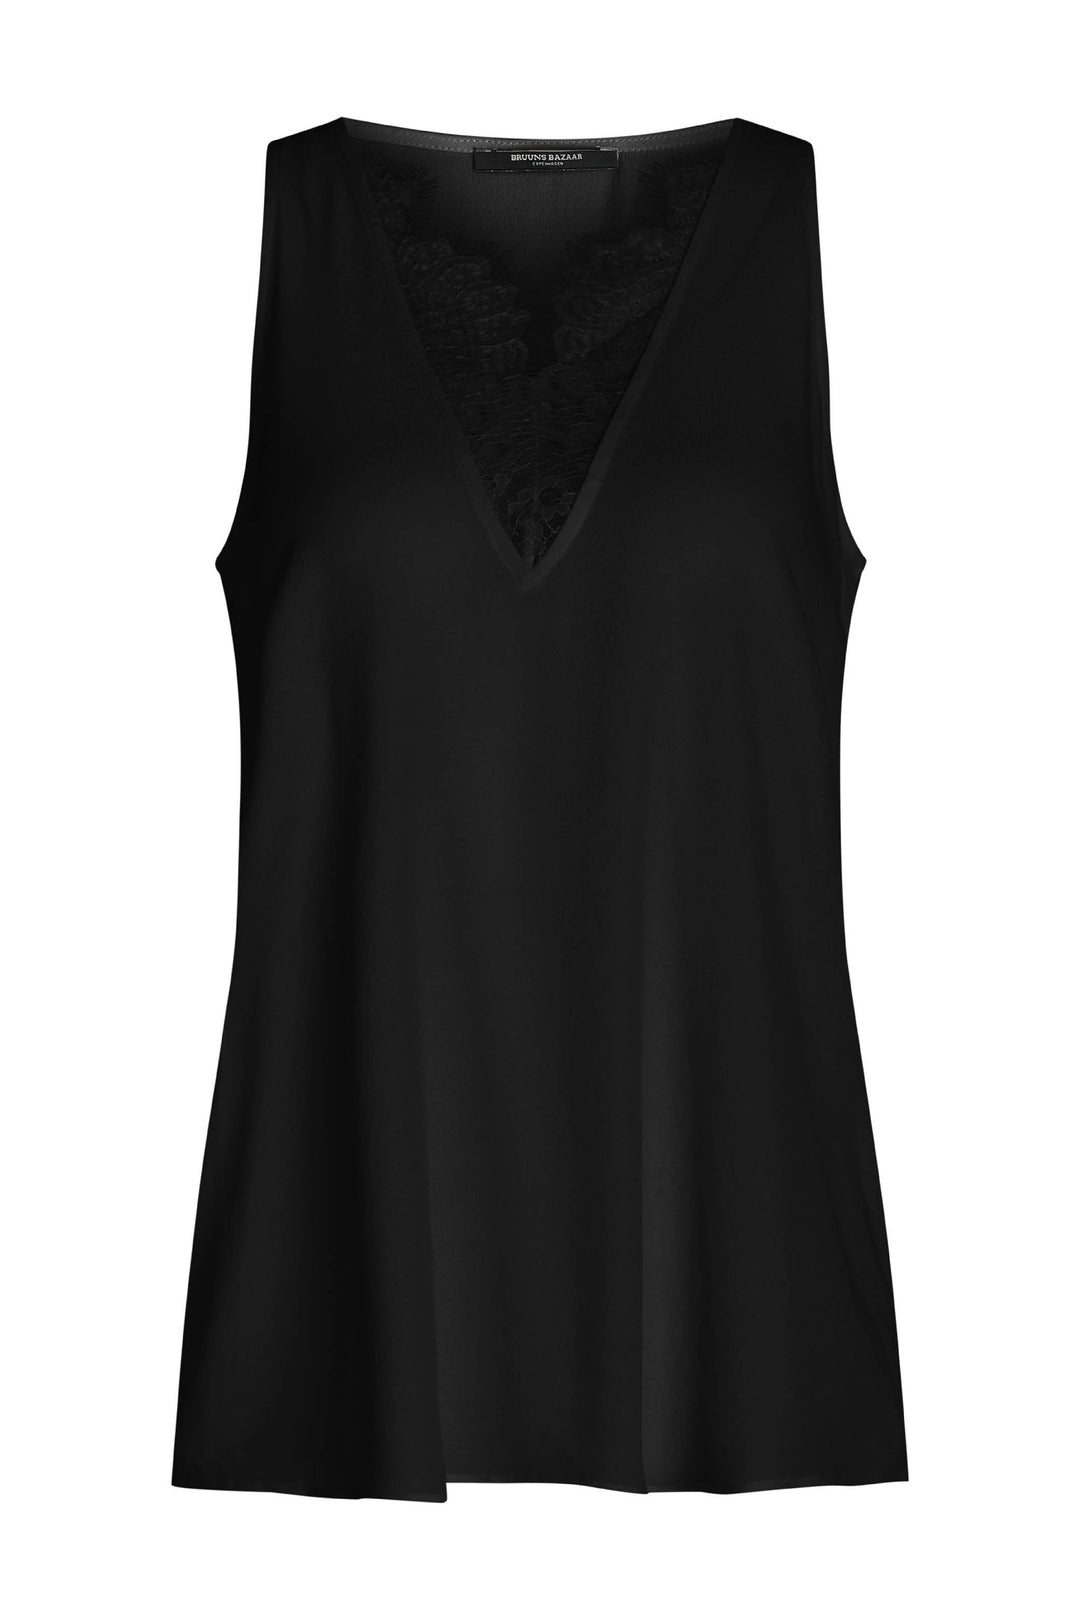 Bruuns Bazaar Women LilliBBKarlie top blouse Black